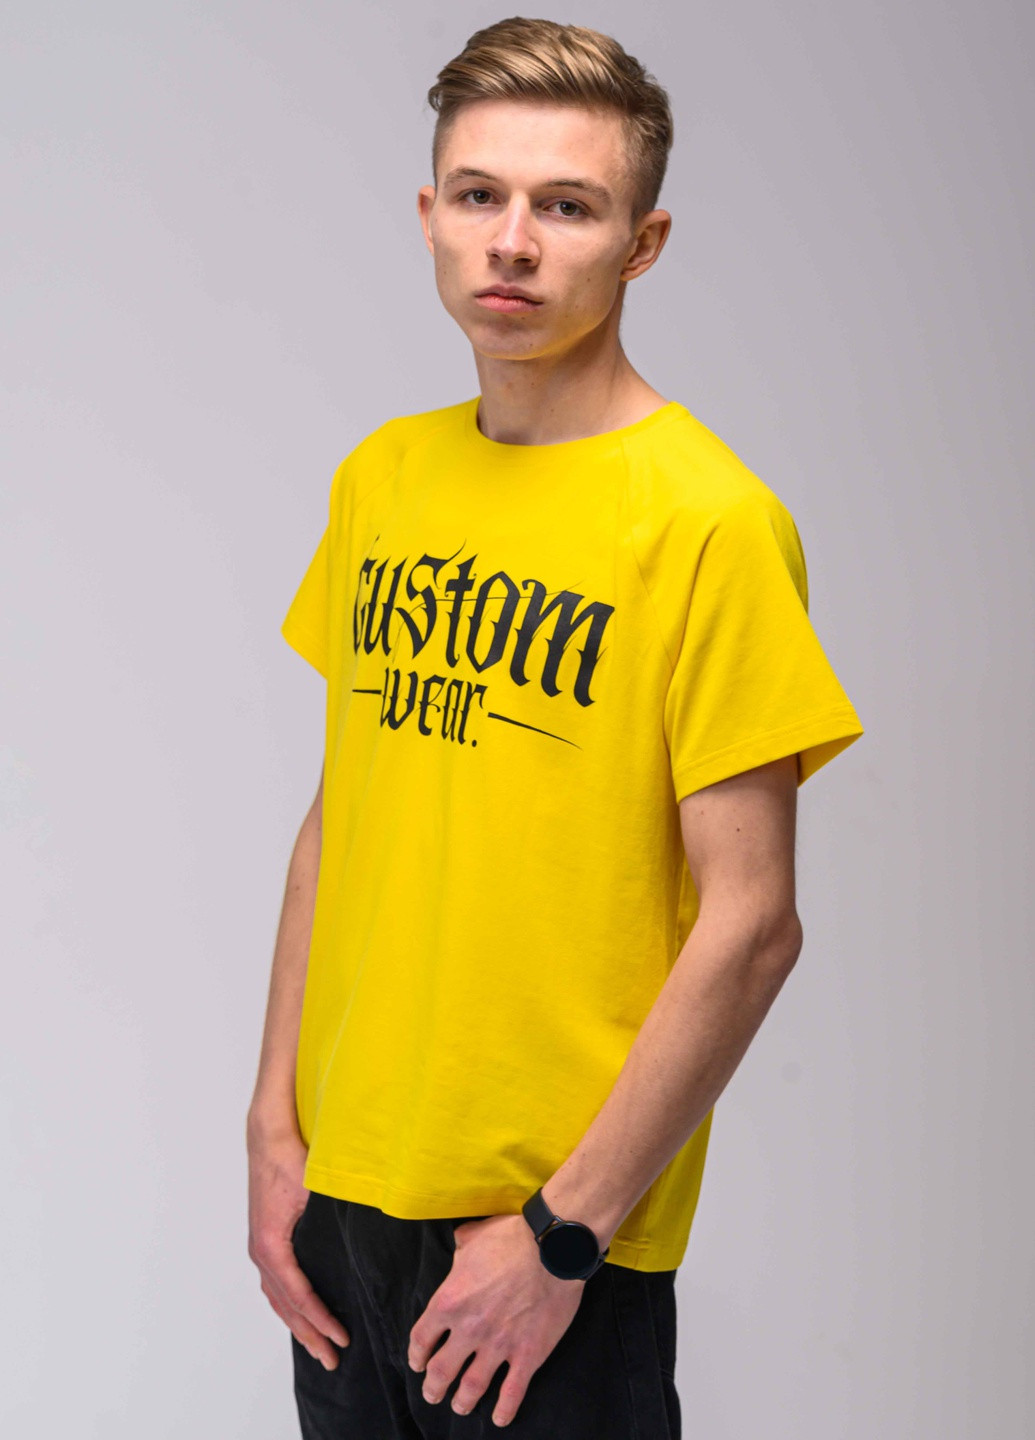 Желтая футболка желтая gothic logo Custom Wear